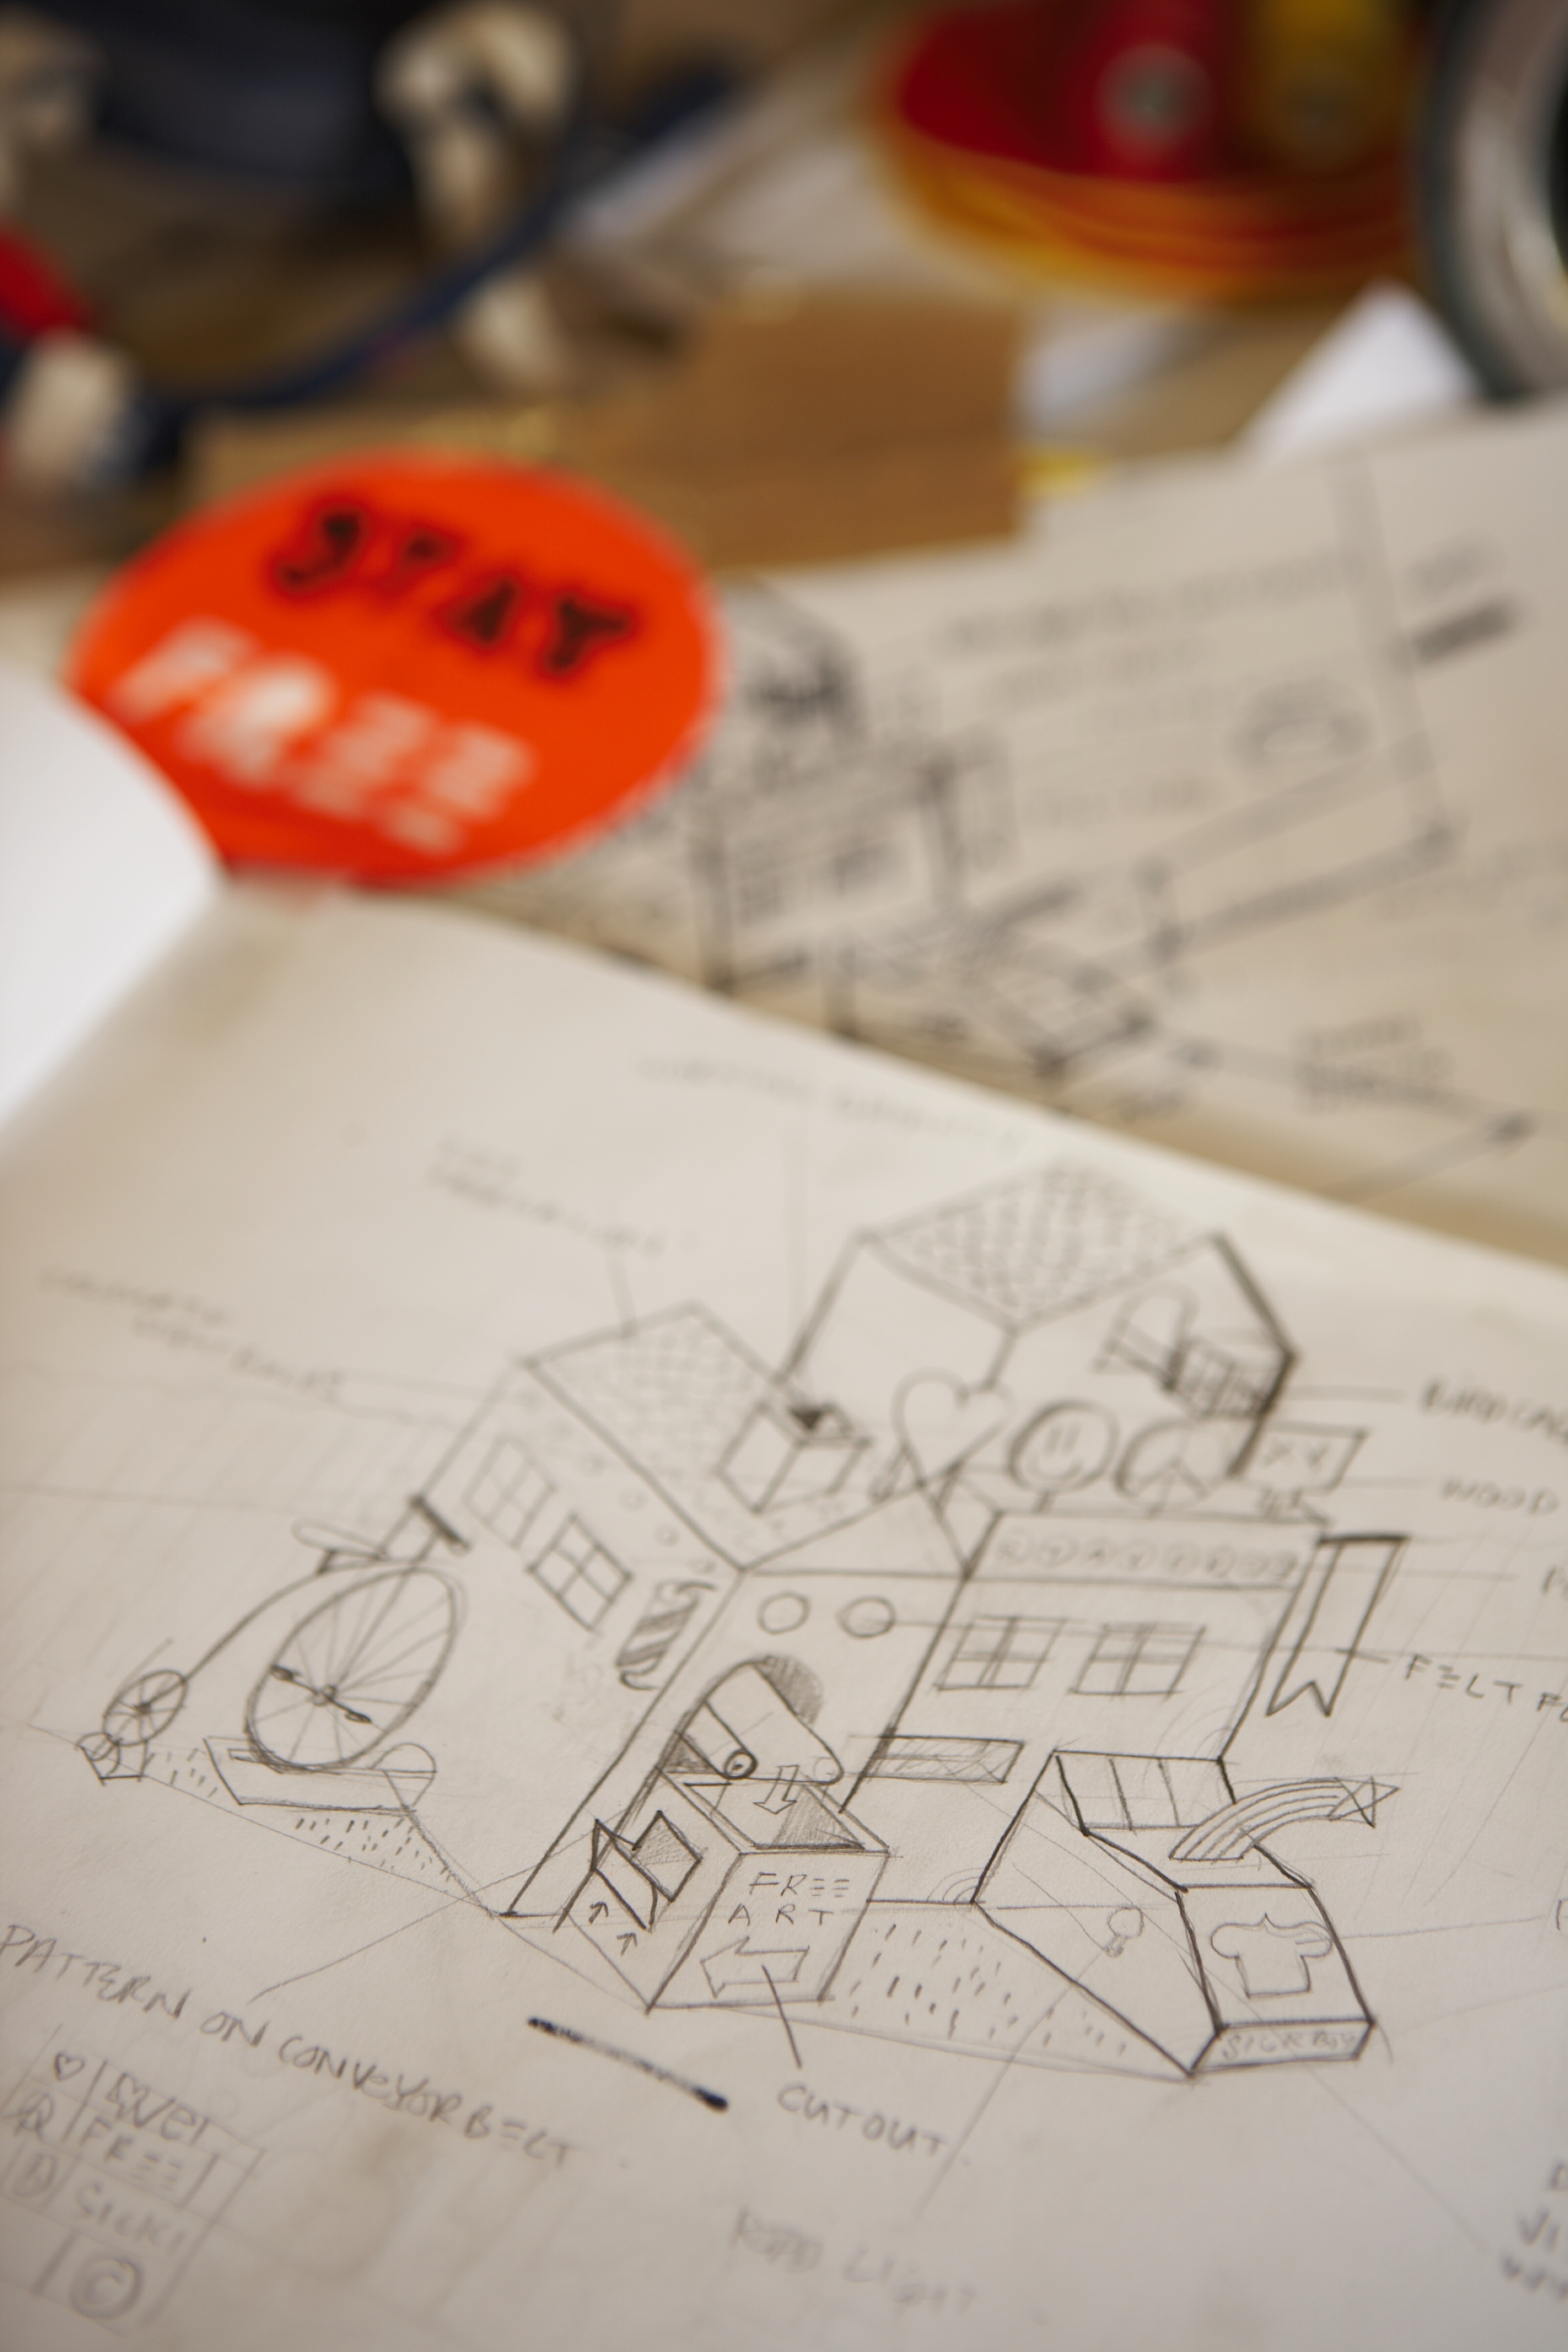 Sickboy's blueprints. Photography by www.andrepenteado.com